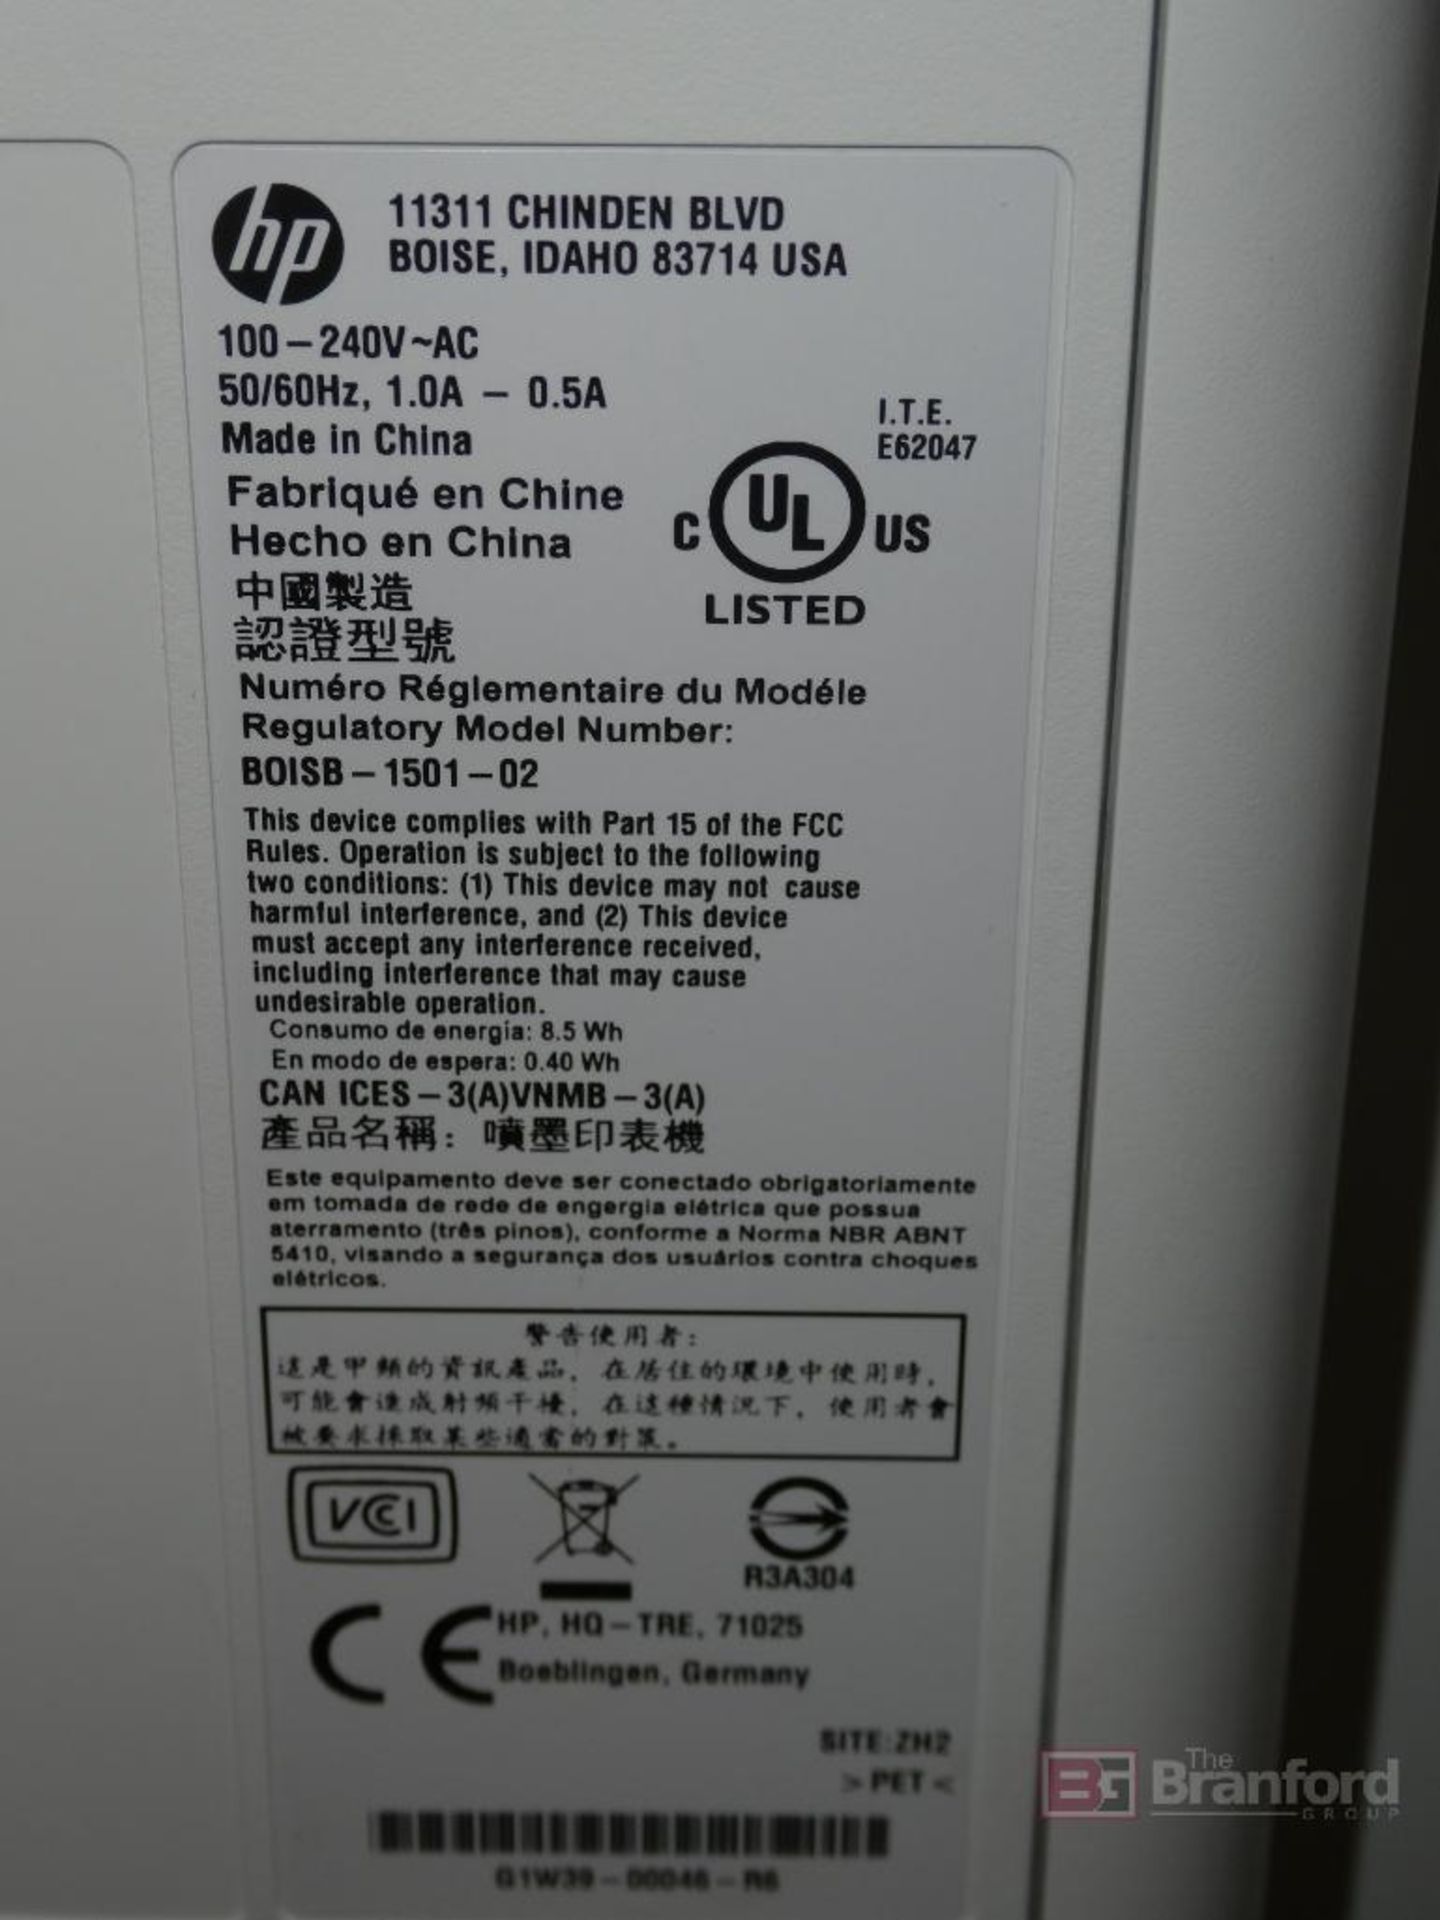 HP PageWide Enterprise MFP586, Color Printer/Scanner/Copy Machine - Image 3 of 4